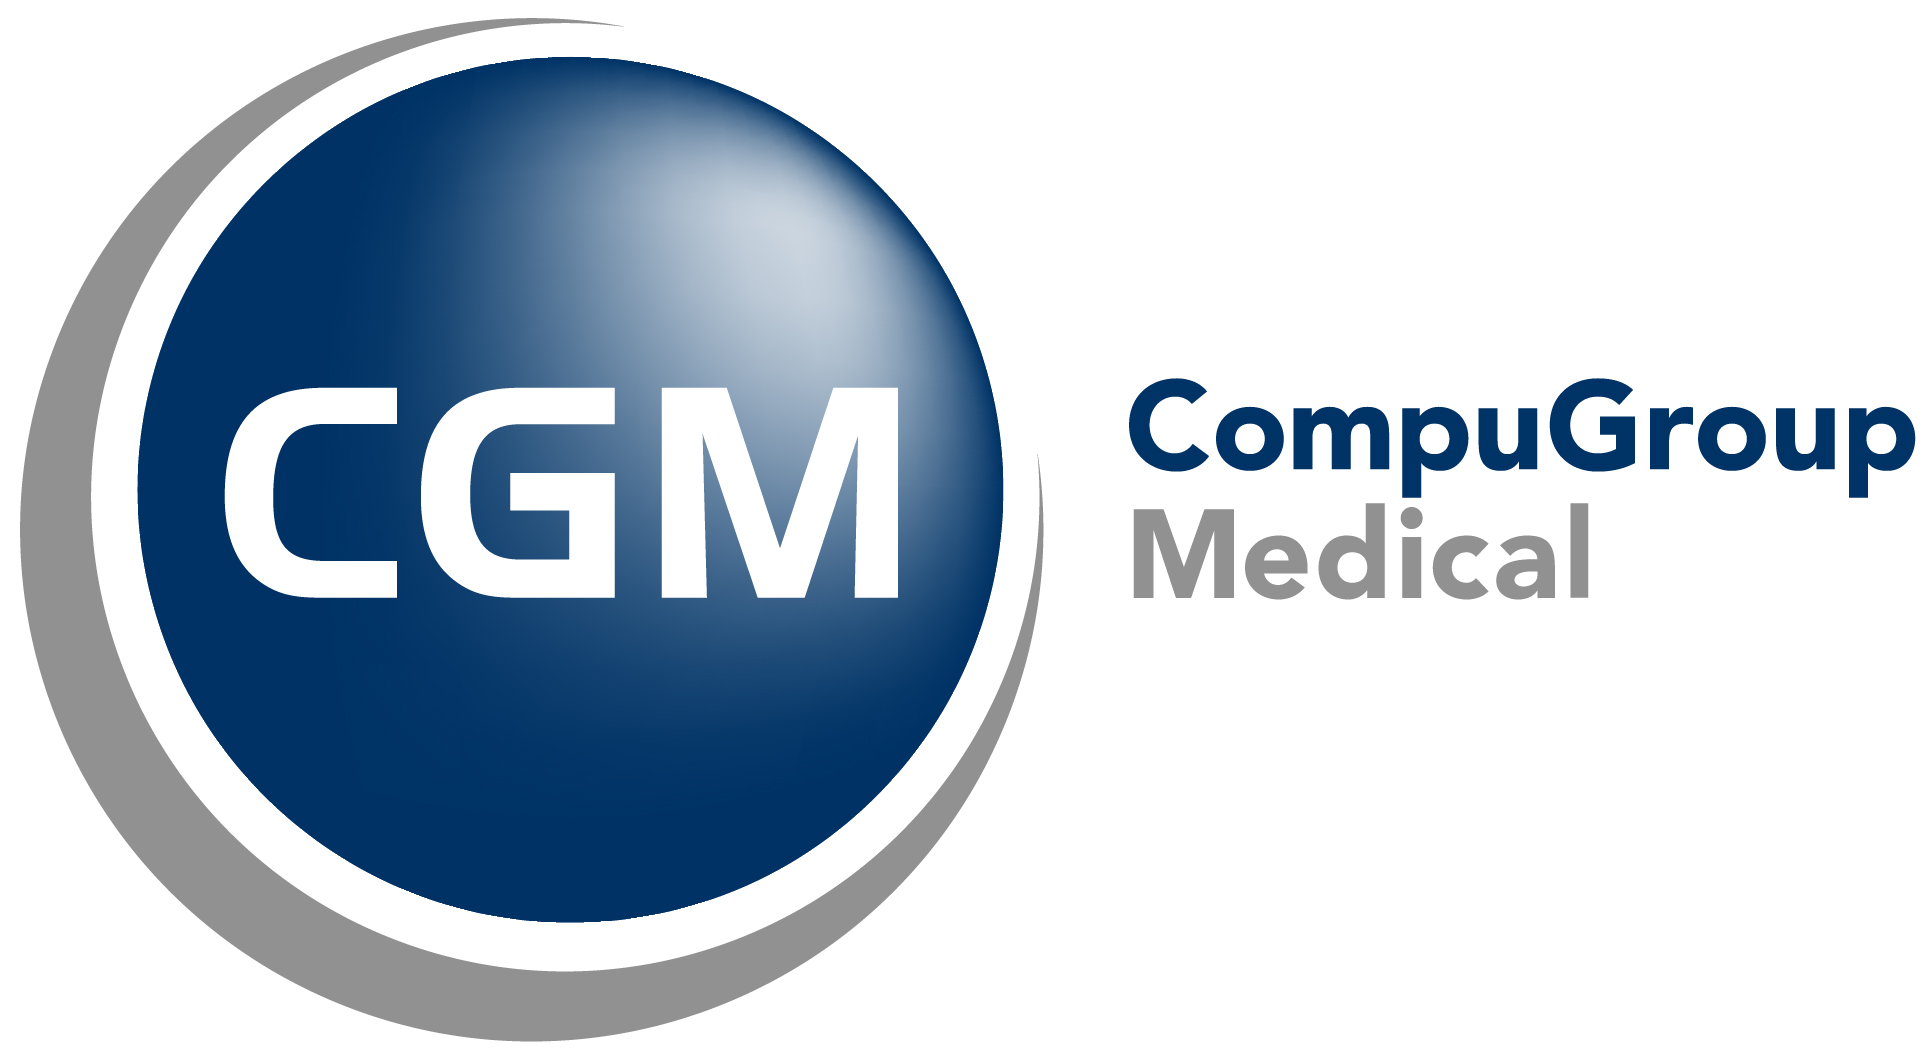 CGM logo internal print 300dpi RGB 1.1